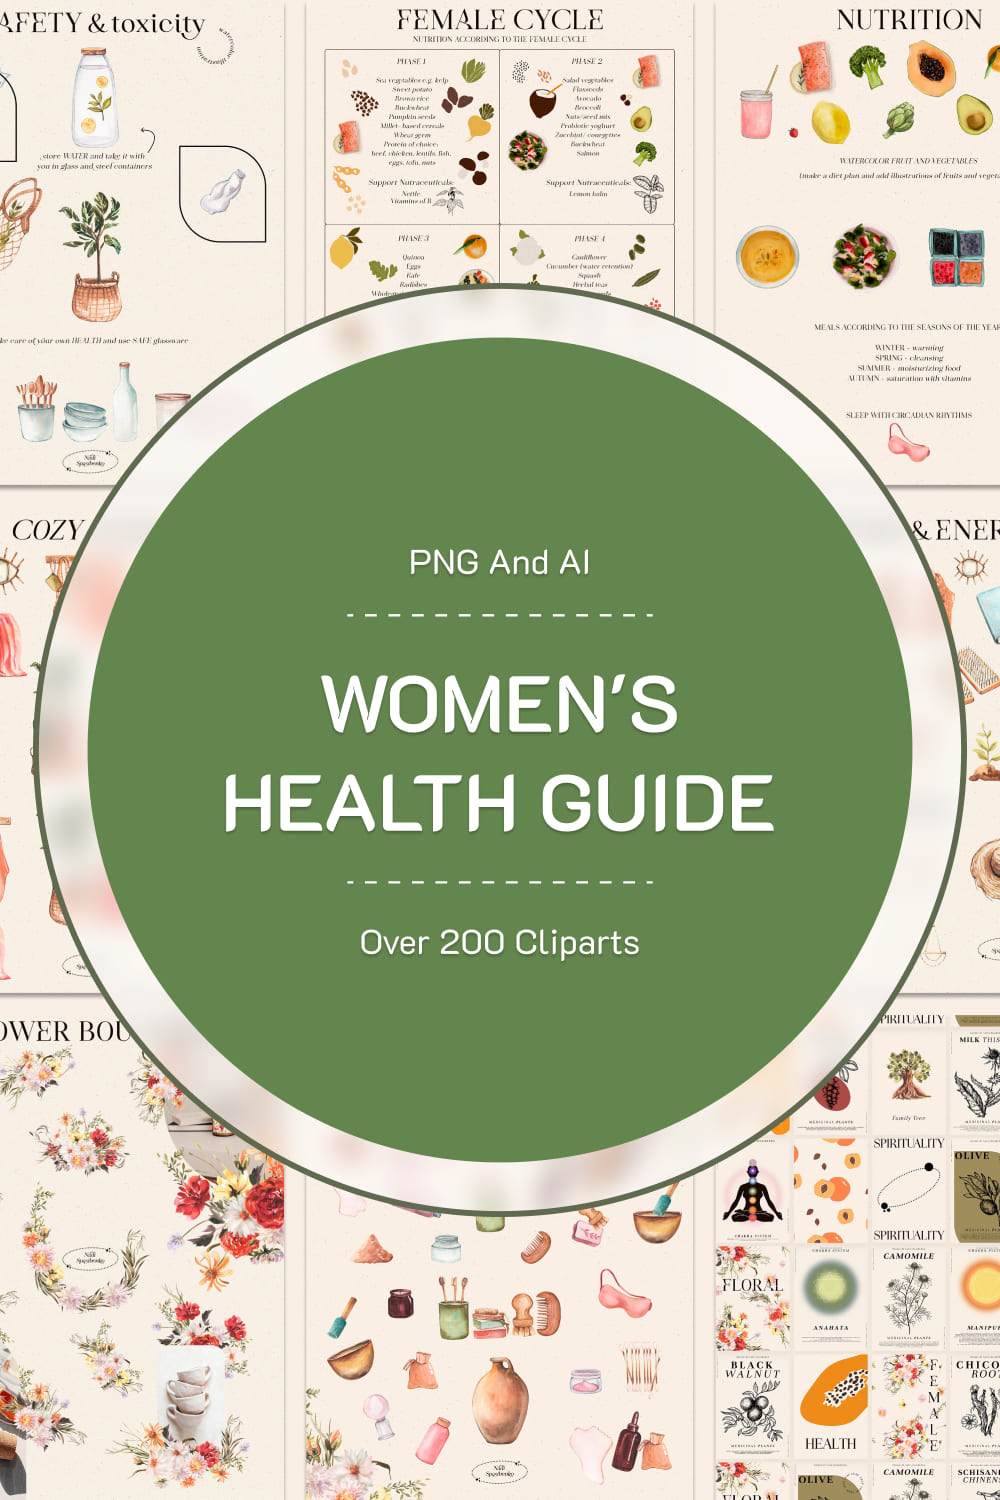 Women's Health Guide - Pinterest.